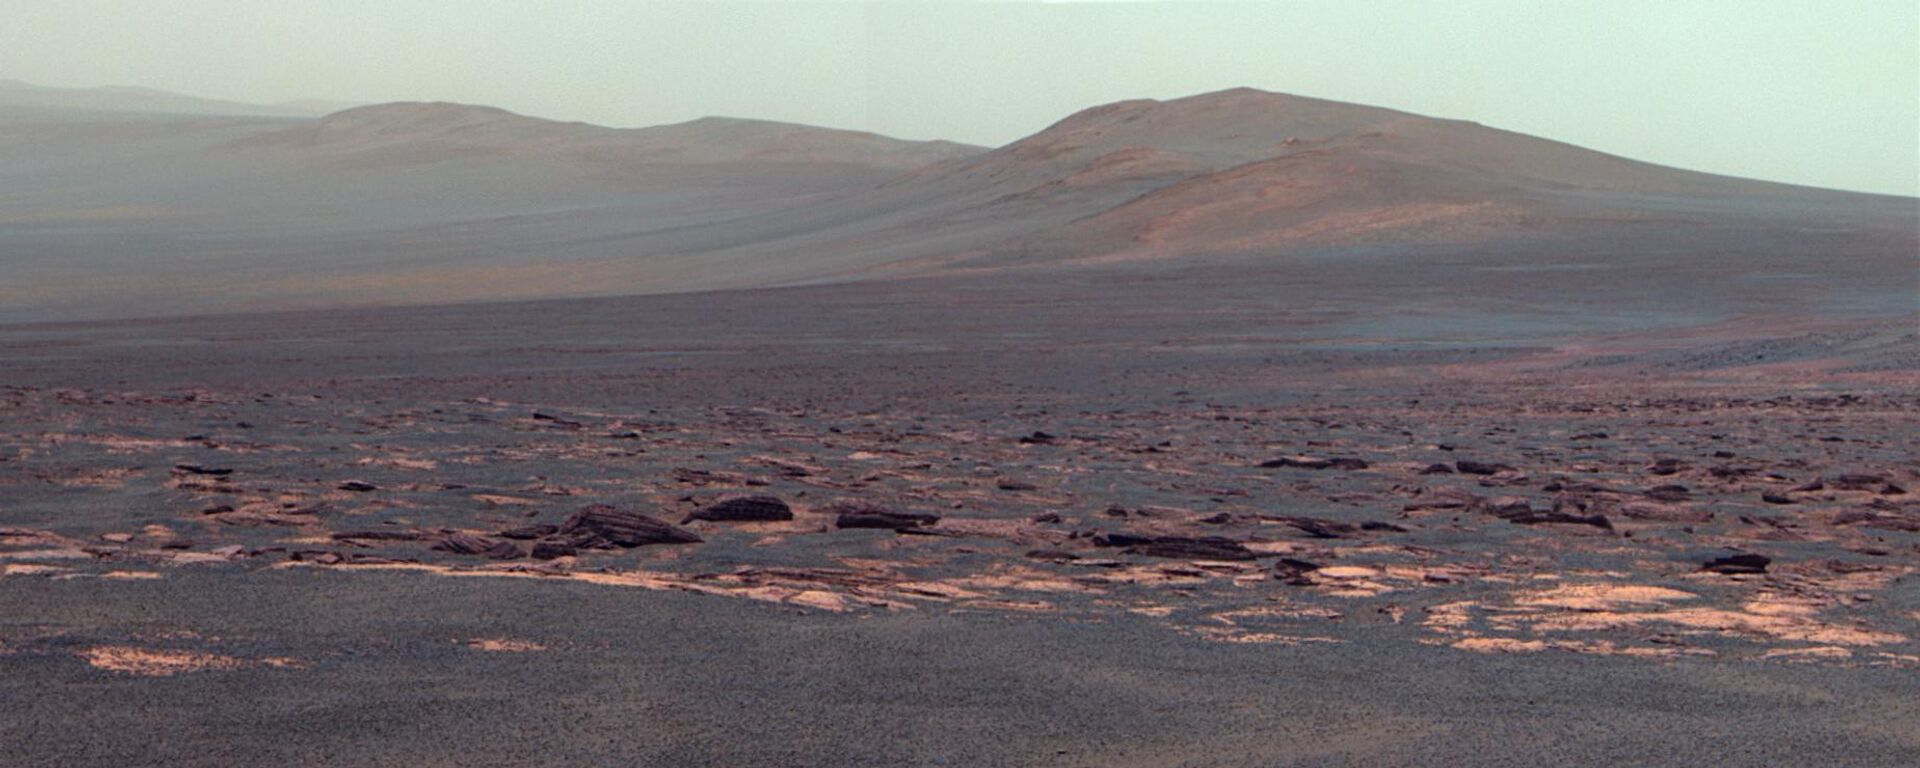 Borda Oeste da Cratera Endeavour em Marte, em falsa cor - Sputnik Brasil, 1920, 28.06.2022